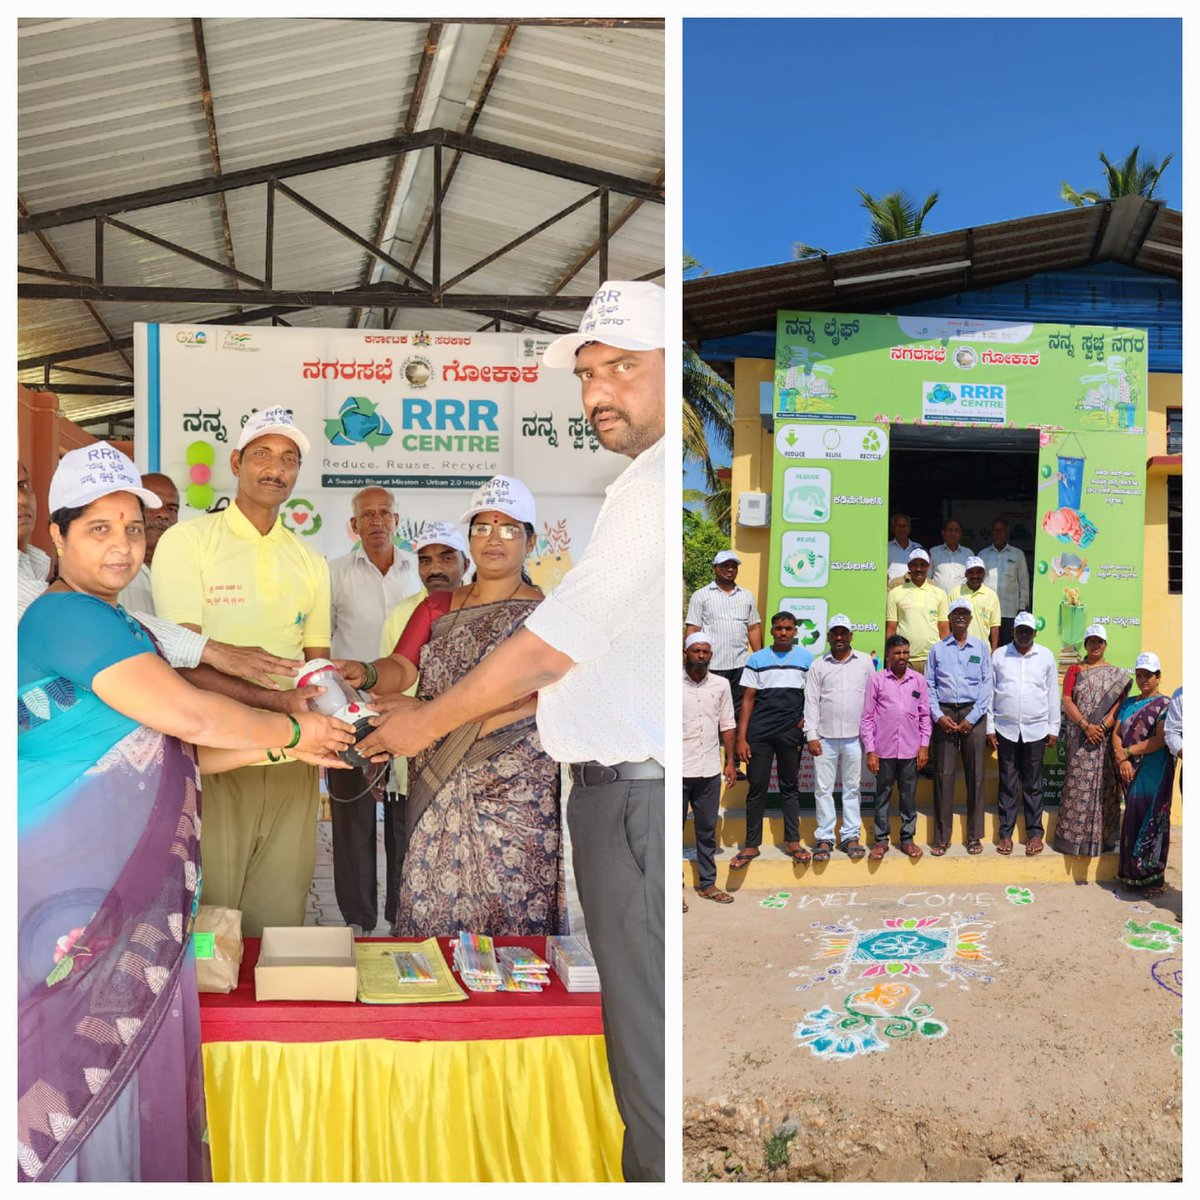 RRR centre inaugurated in Ashraya Badavane DWCC Gokak.
#RRR4LiFE #ChooseLiFE #IndiaVsGarbage #Karnataka #NannaLiFENannaSwachhNagara